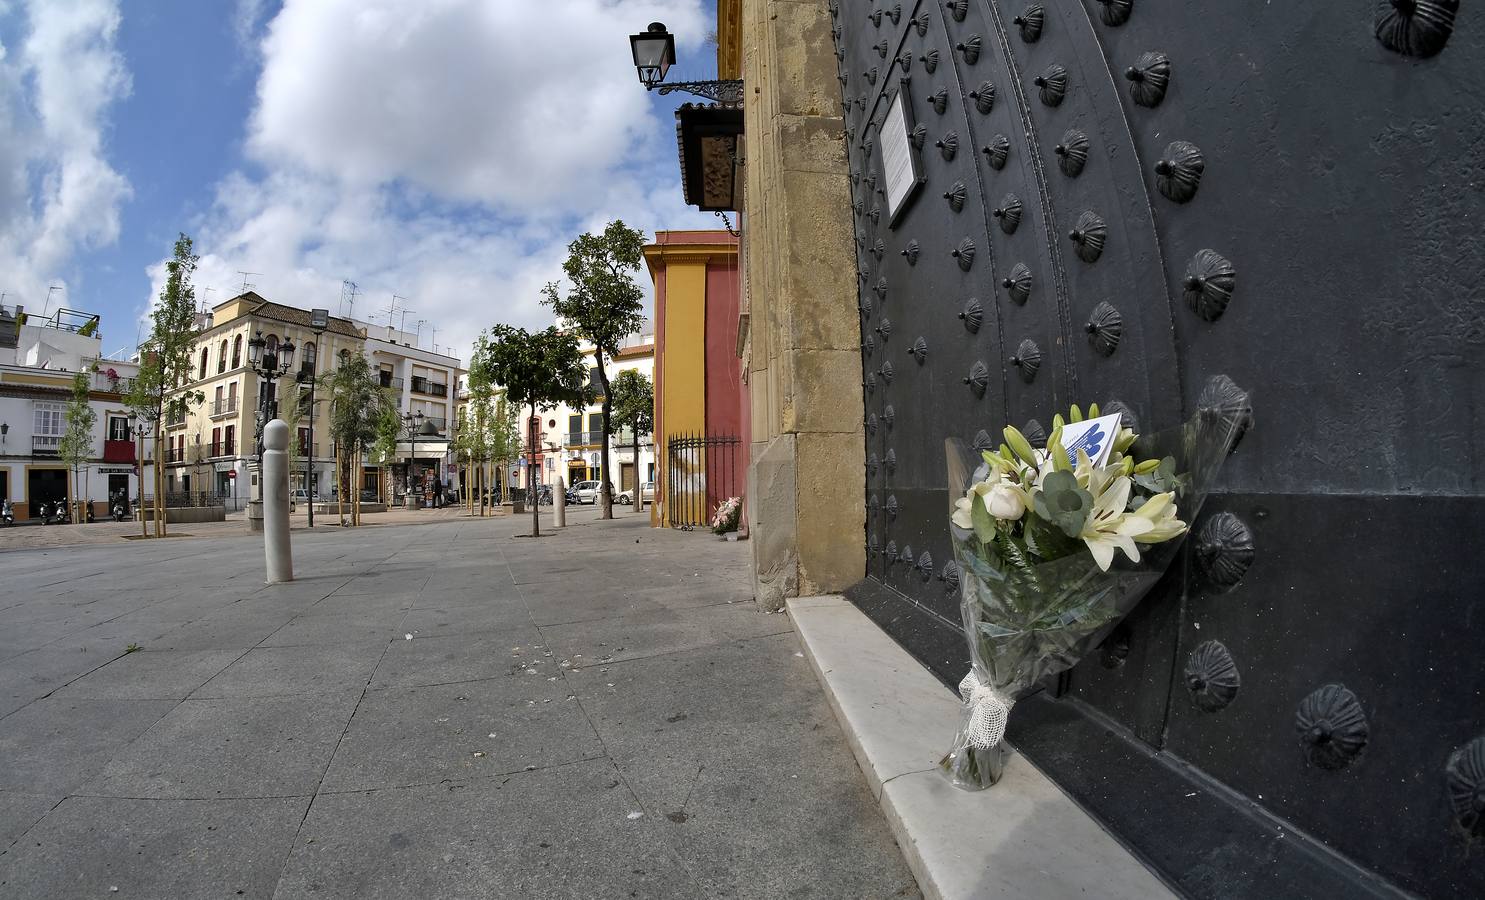 Imágenes de la Semana Santa de Sevilla de 2020: El Dulce Nombre